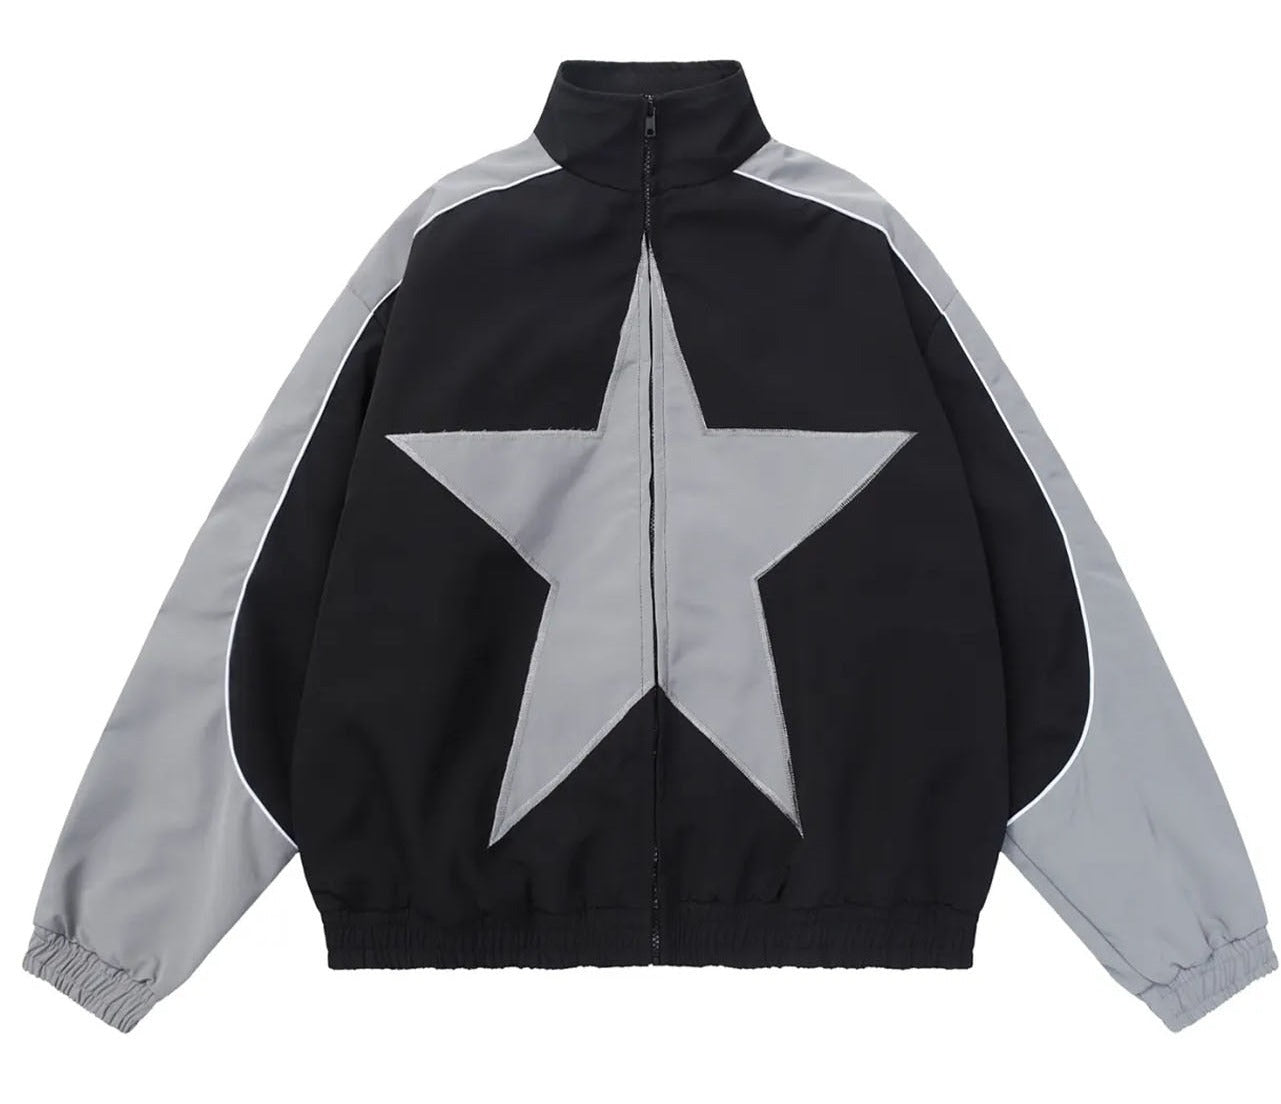 ★star jacket★